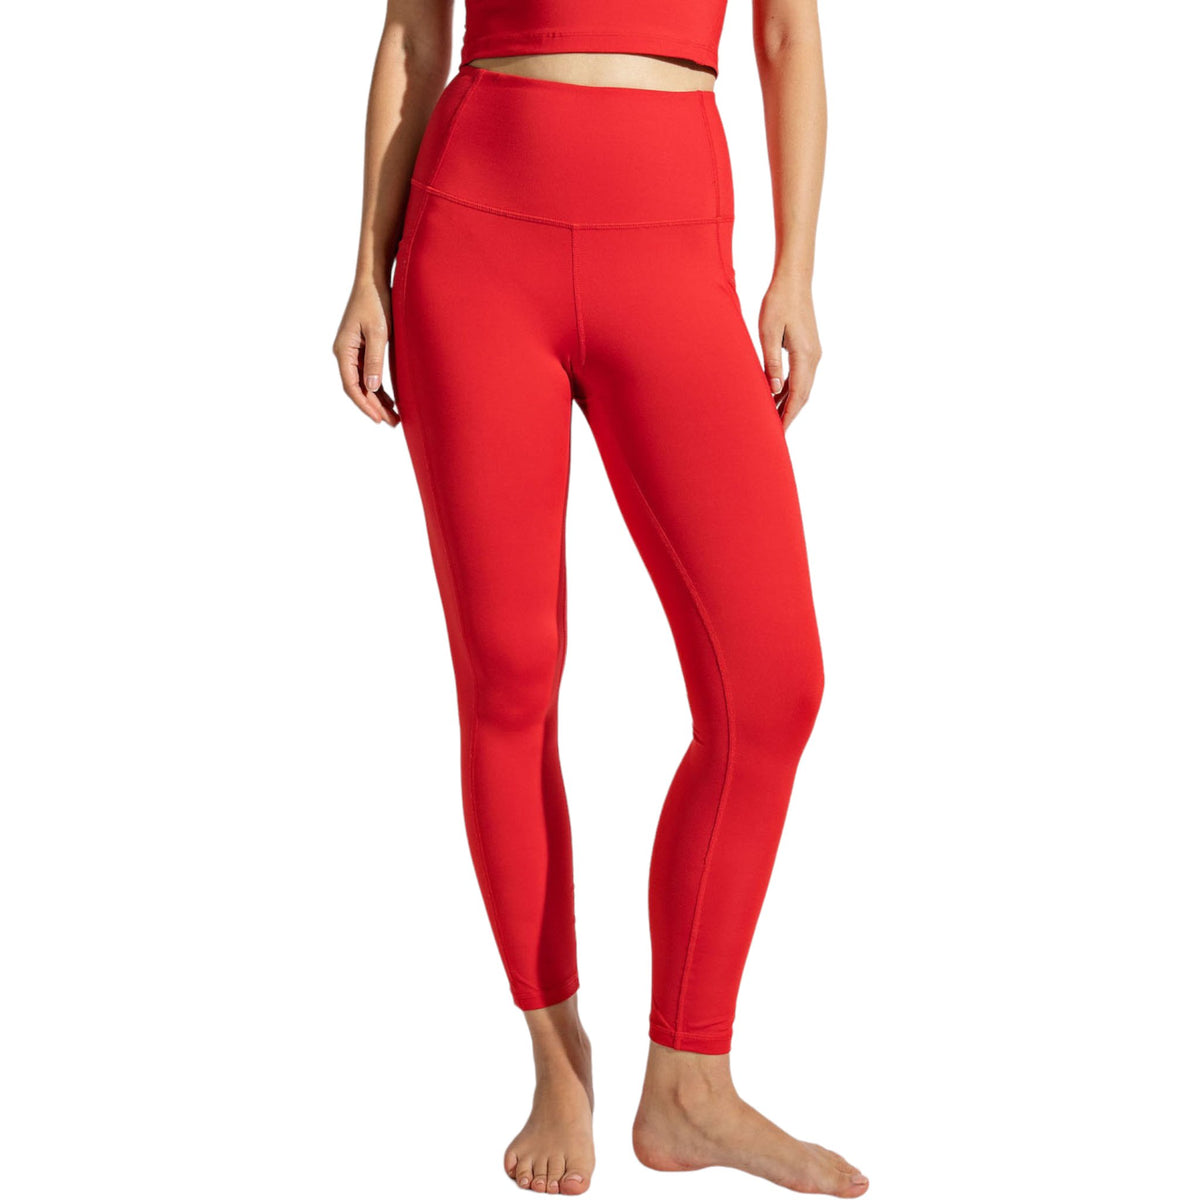 Plus Size Women's Red Compression Leggings - Fabulously Dressed Boutique –  Fabulously Dressed Boutique